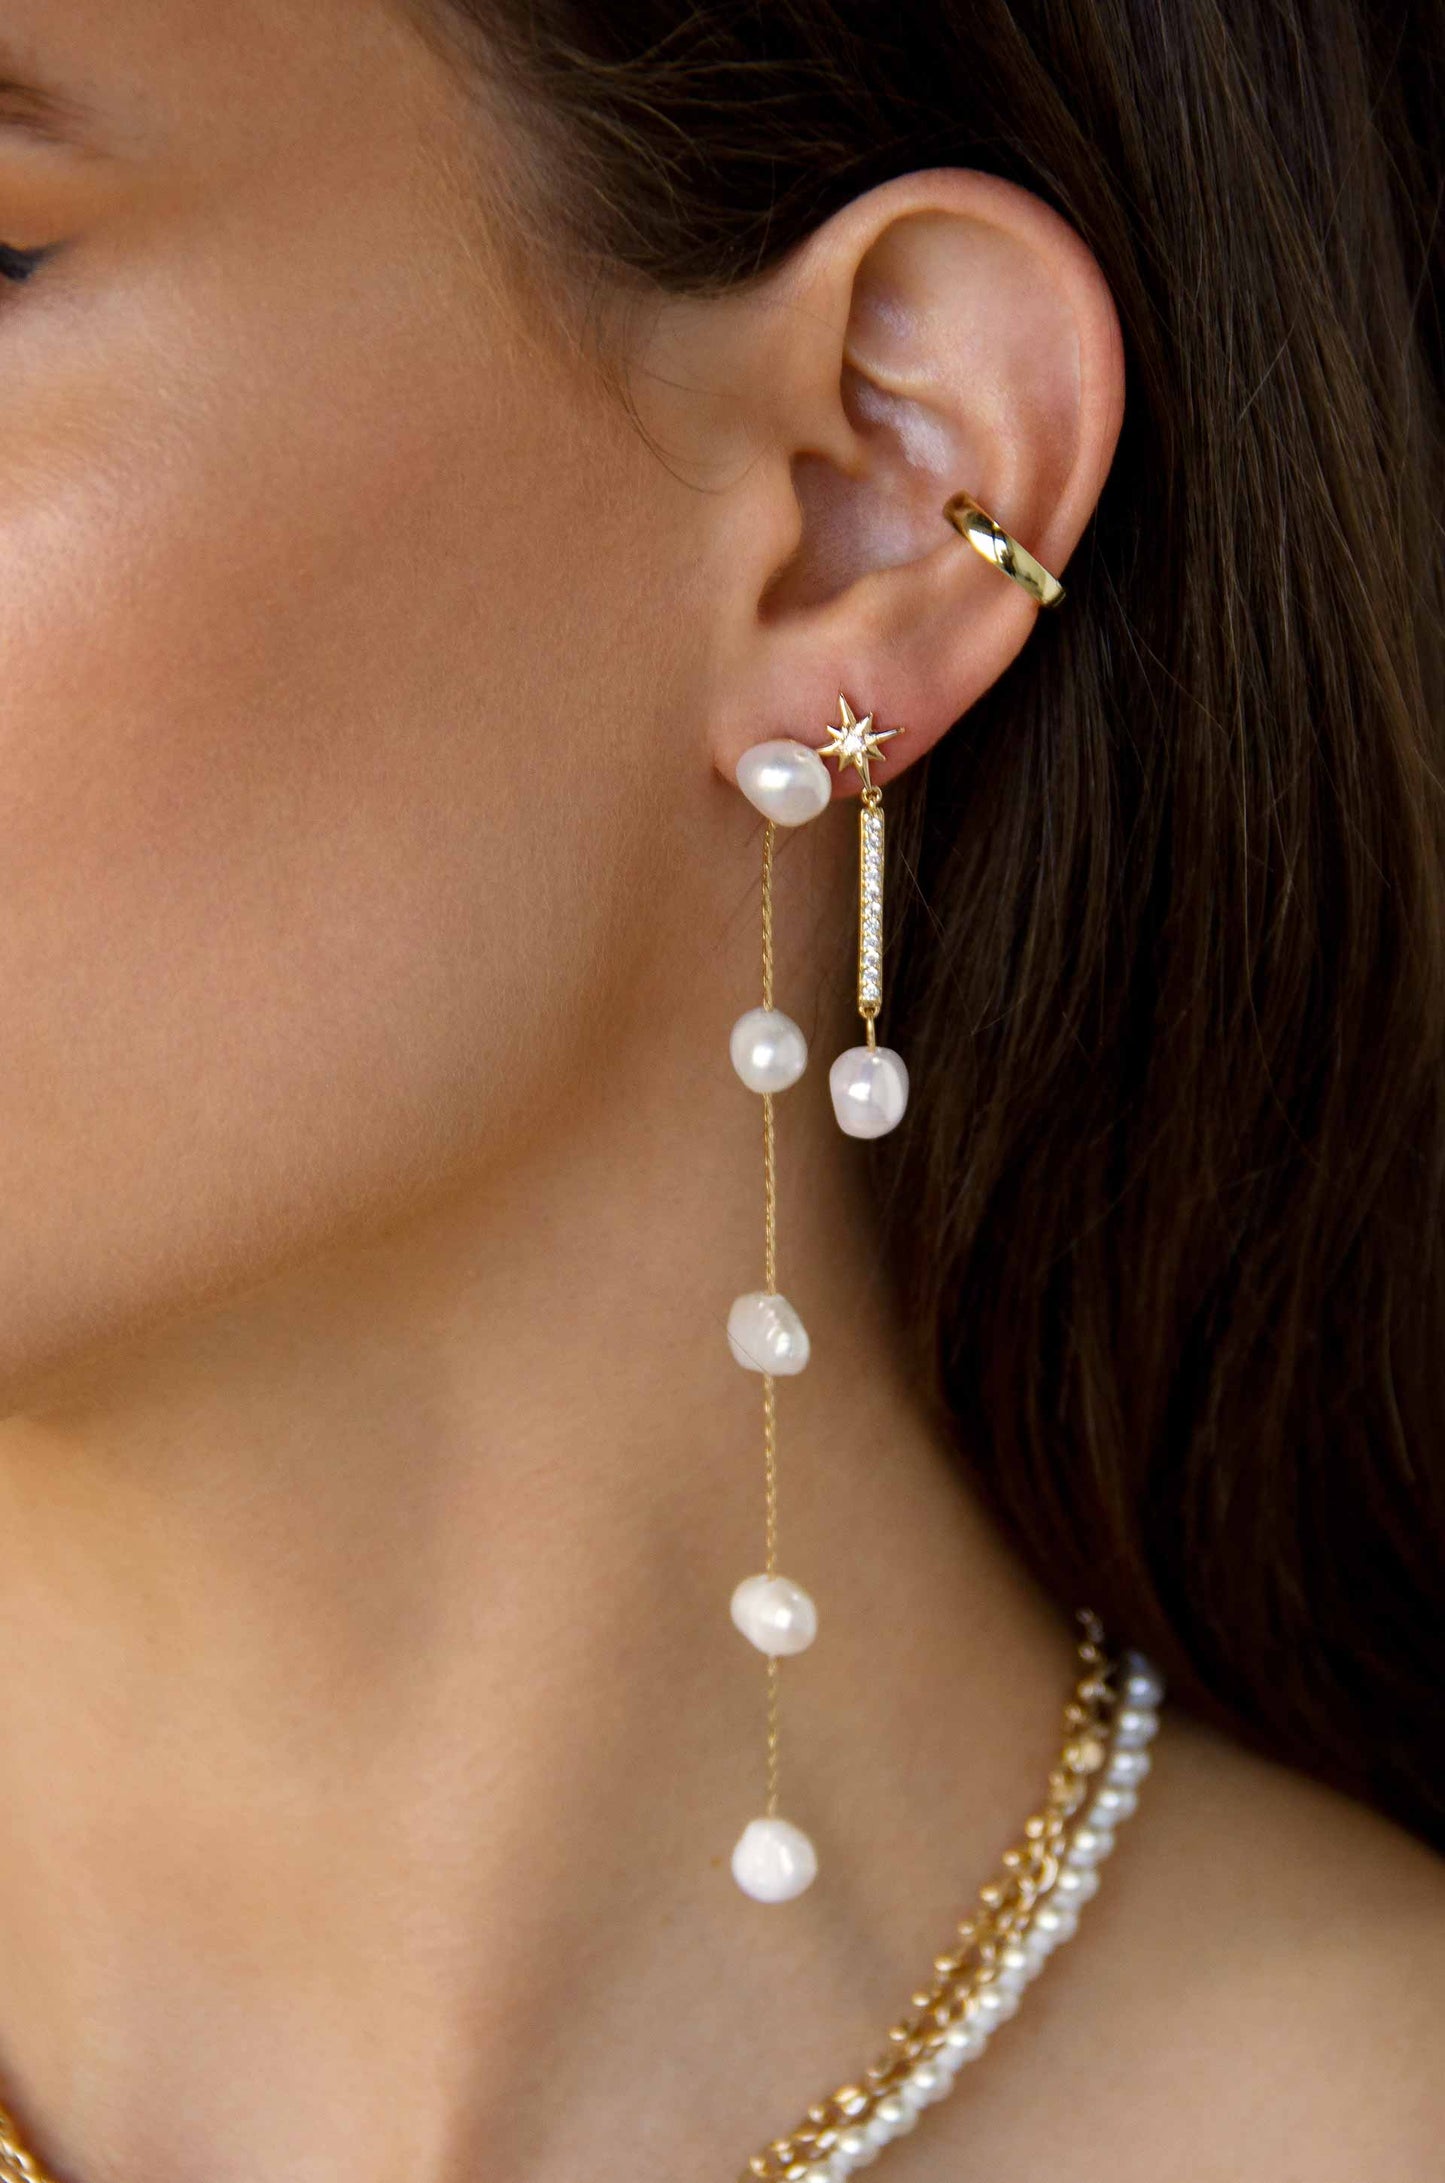 Celestial Pearl Dangle Earrings - Premium Earrings from Ettika - Just $55! Shop now at Tooksie